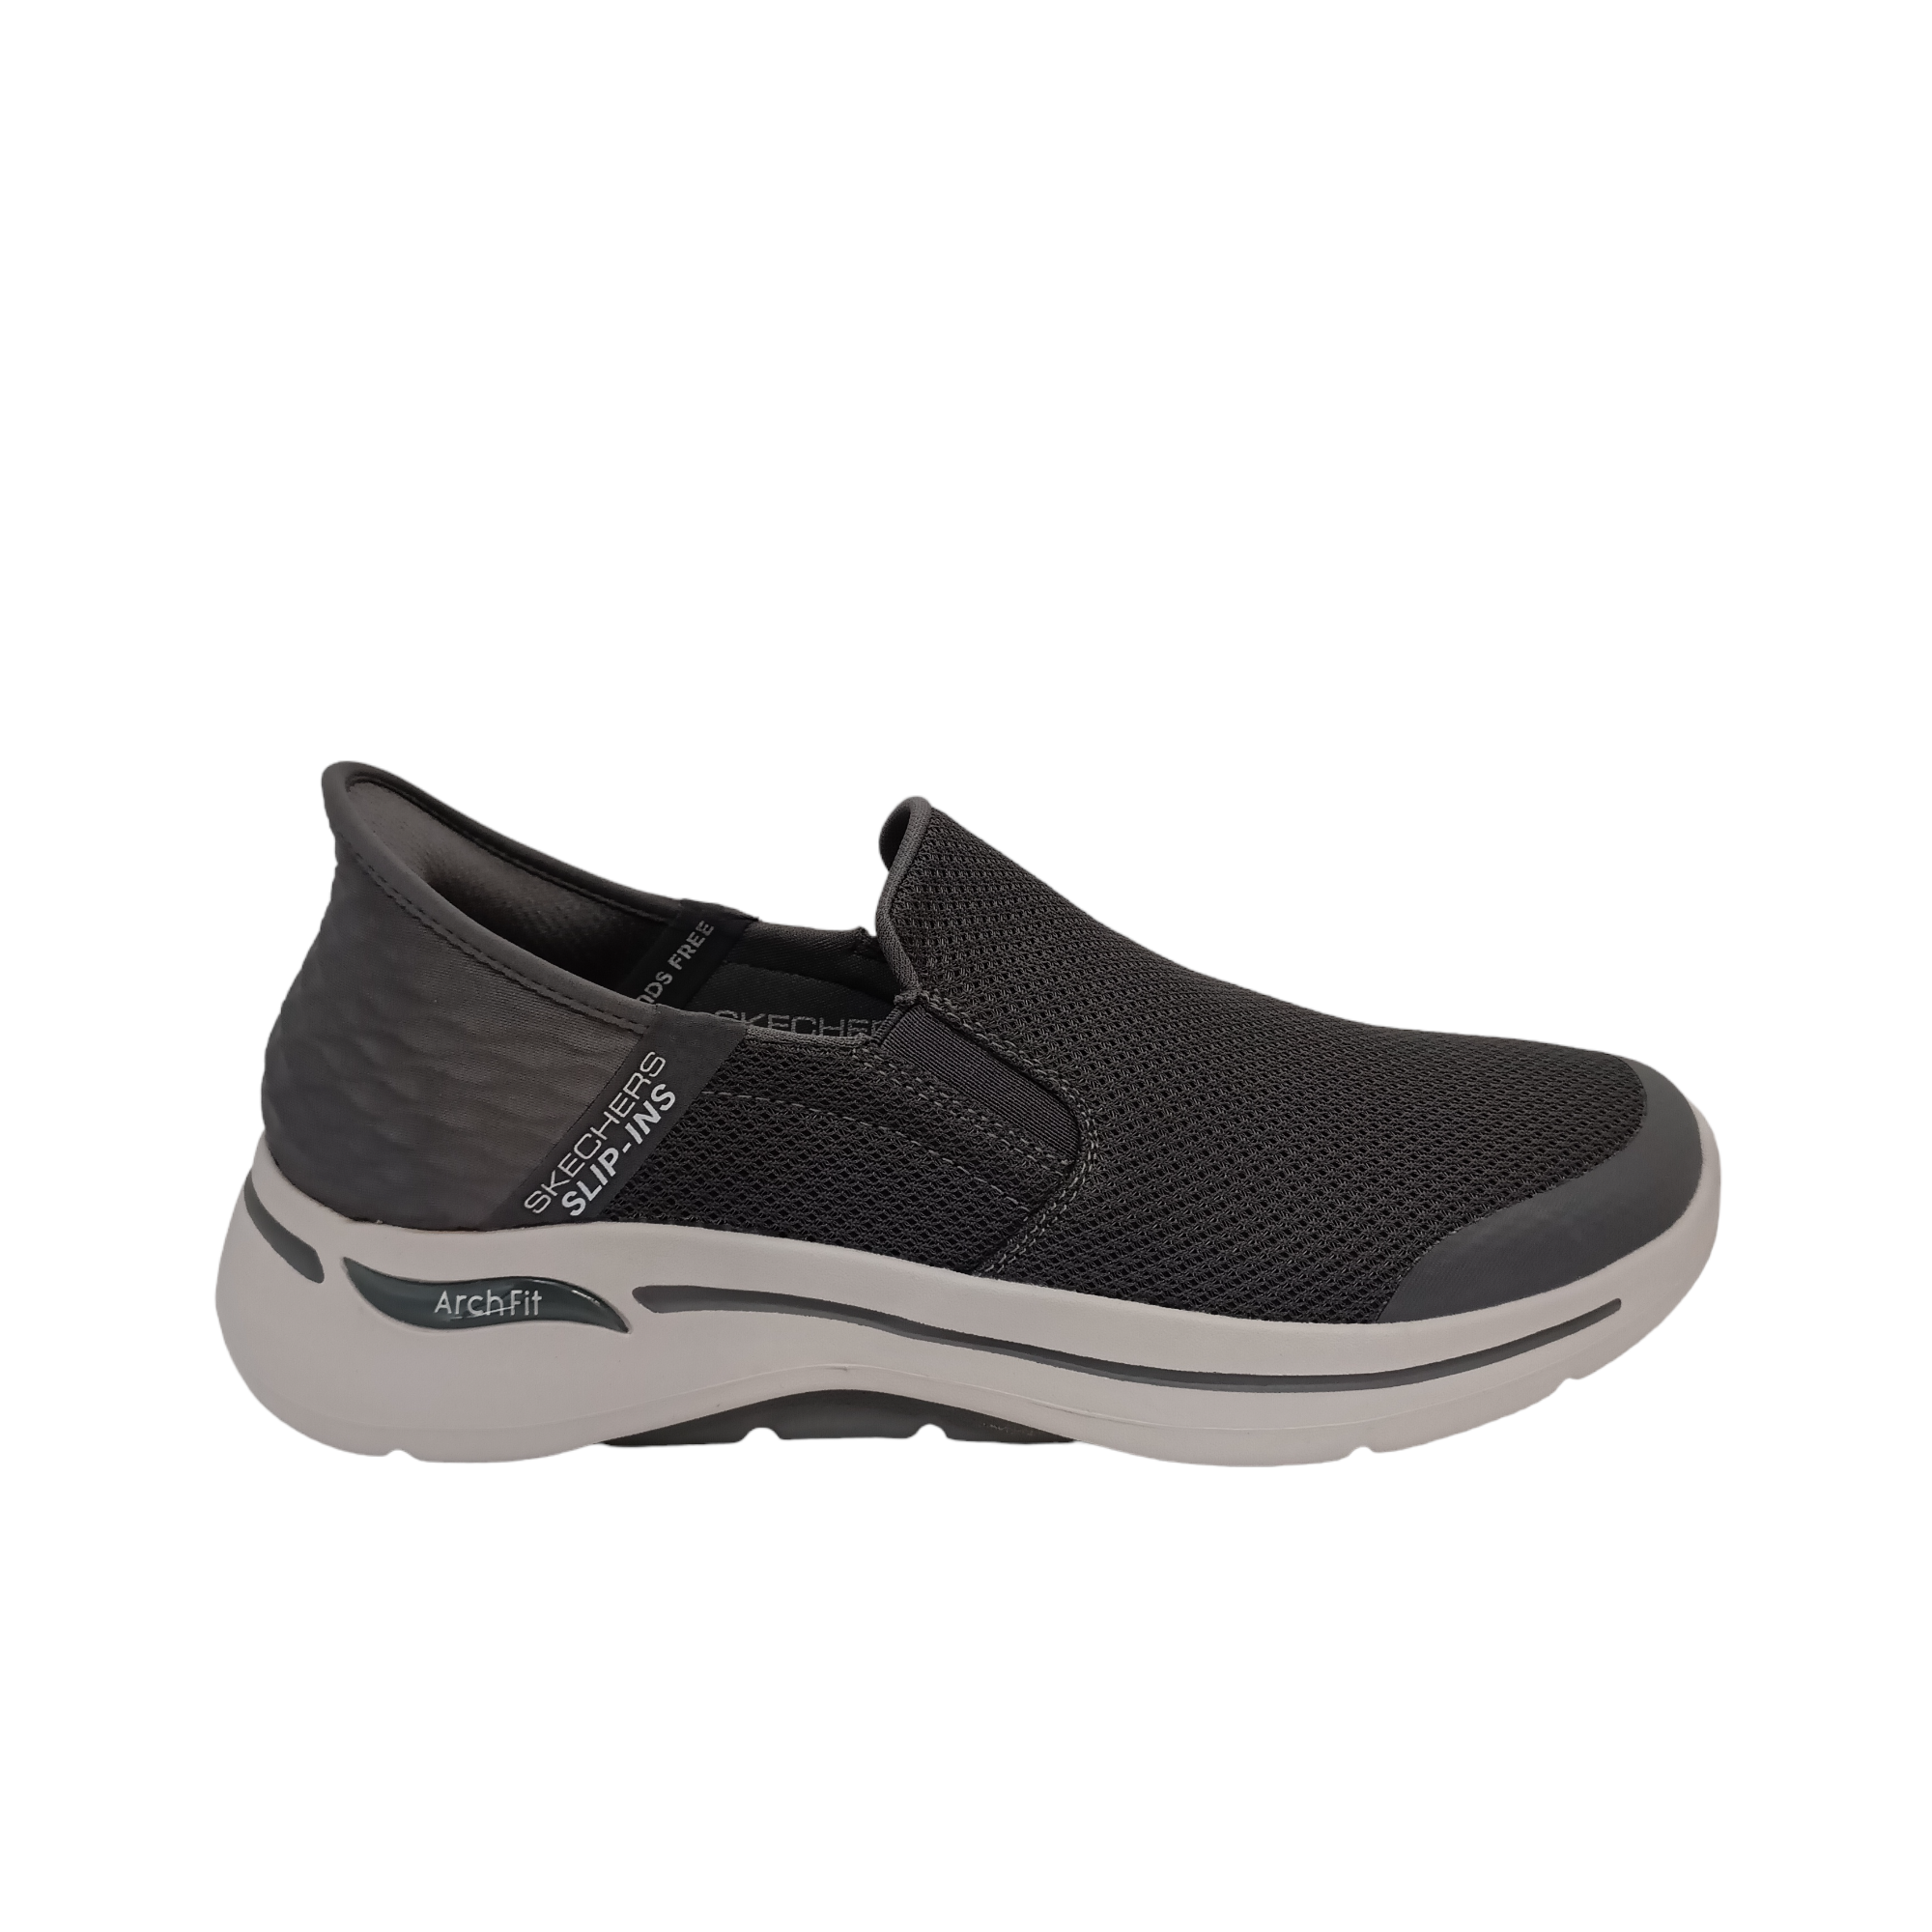 GW Arch Fit - shoe&amp;me - Skechers - Sneakers - Mens, Sneakers, Summer